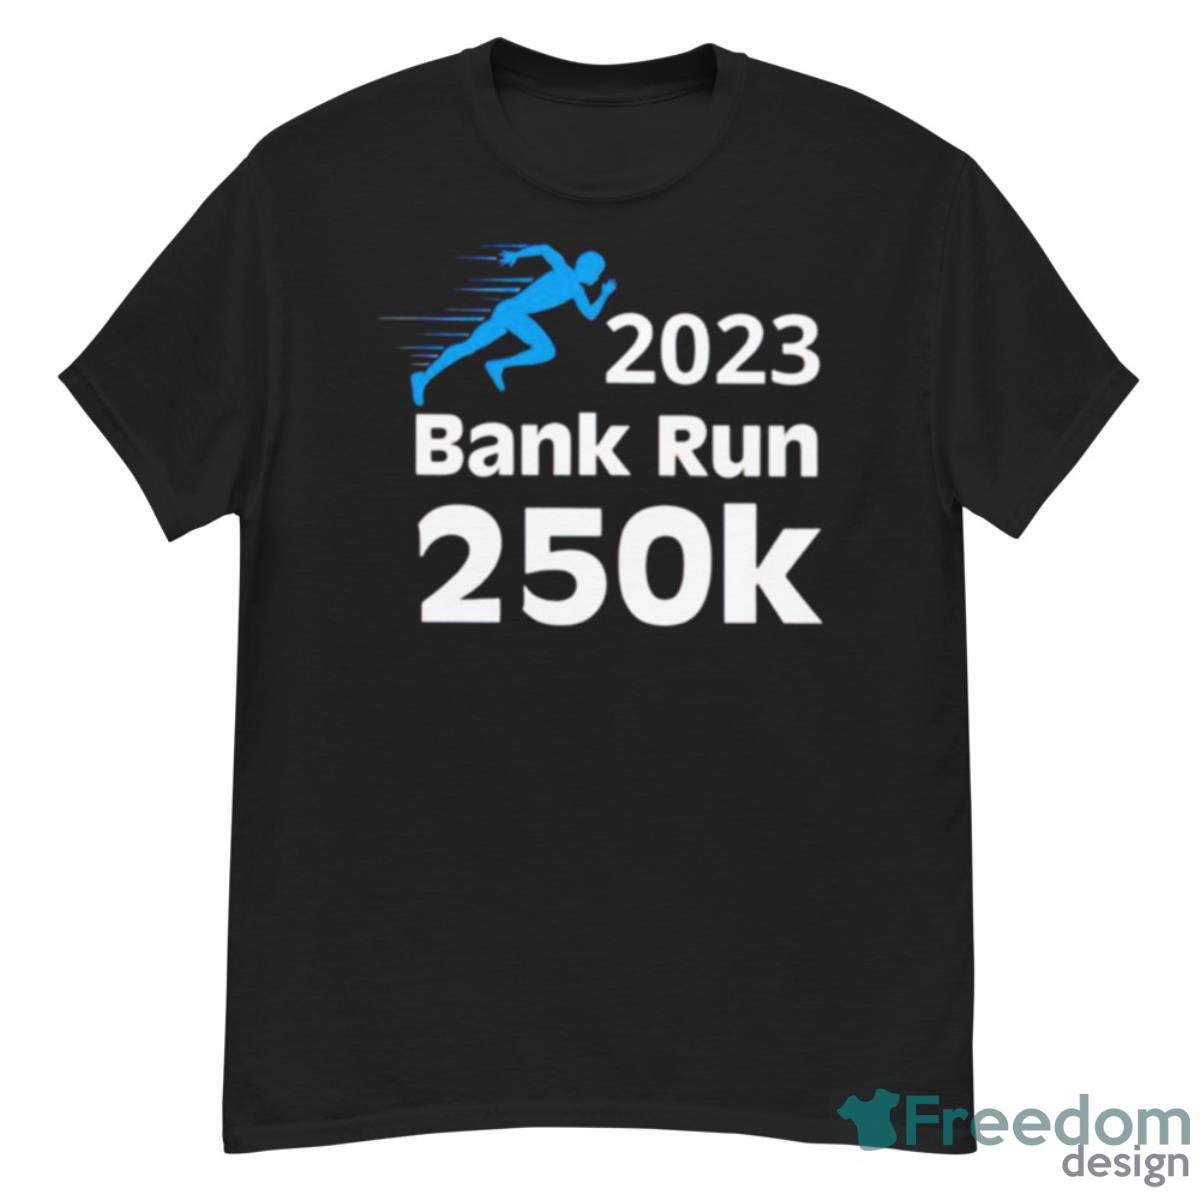 Svb 2023 Bank Run 250K Shirt - G500 Men’s Classic T-Shirt